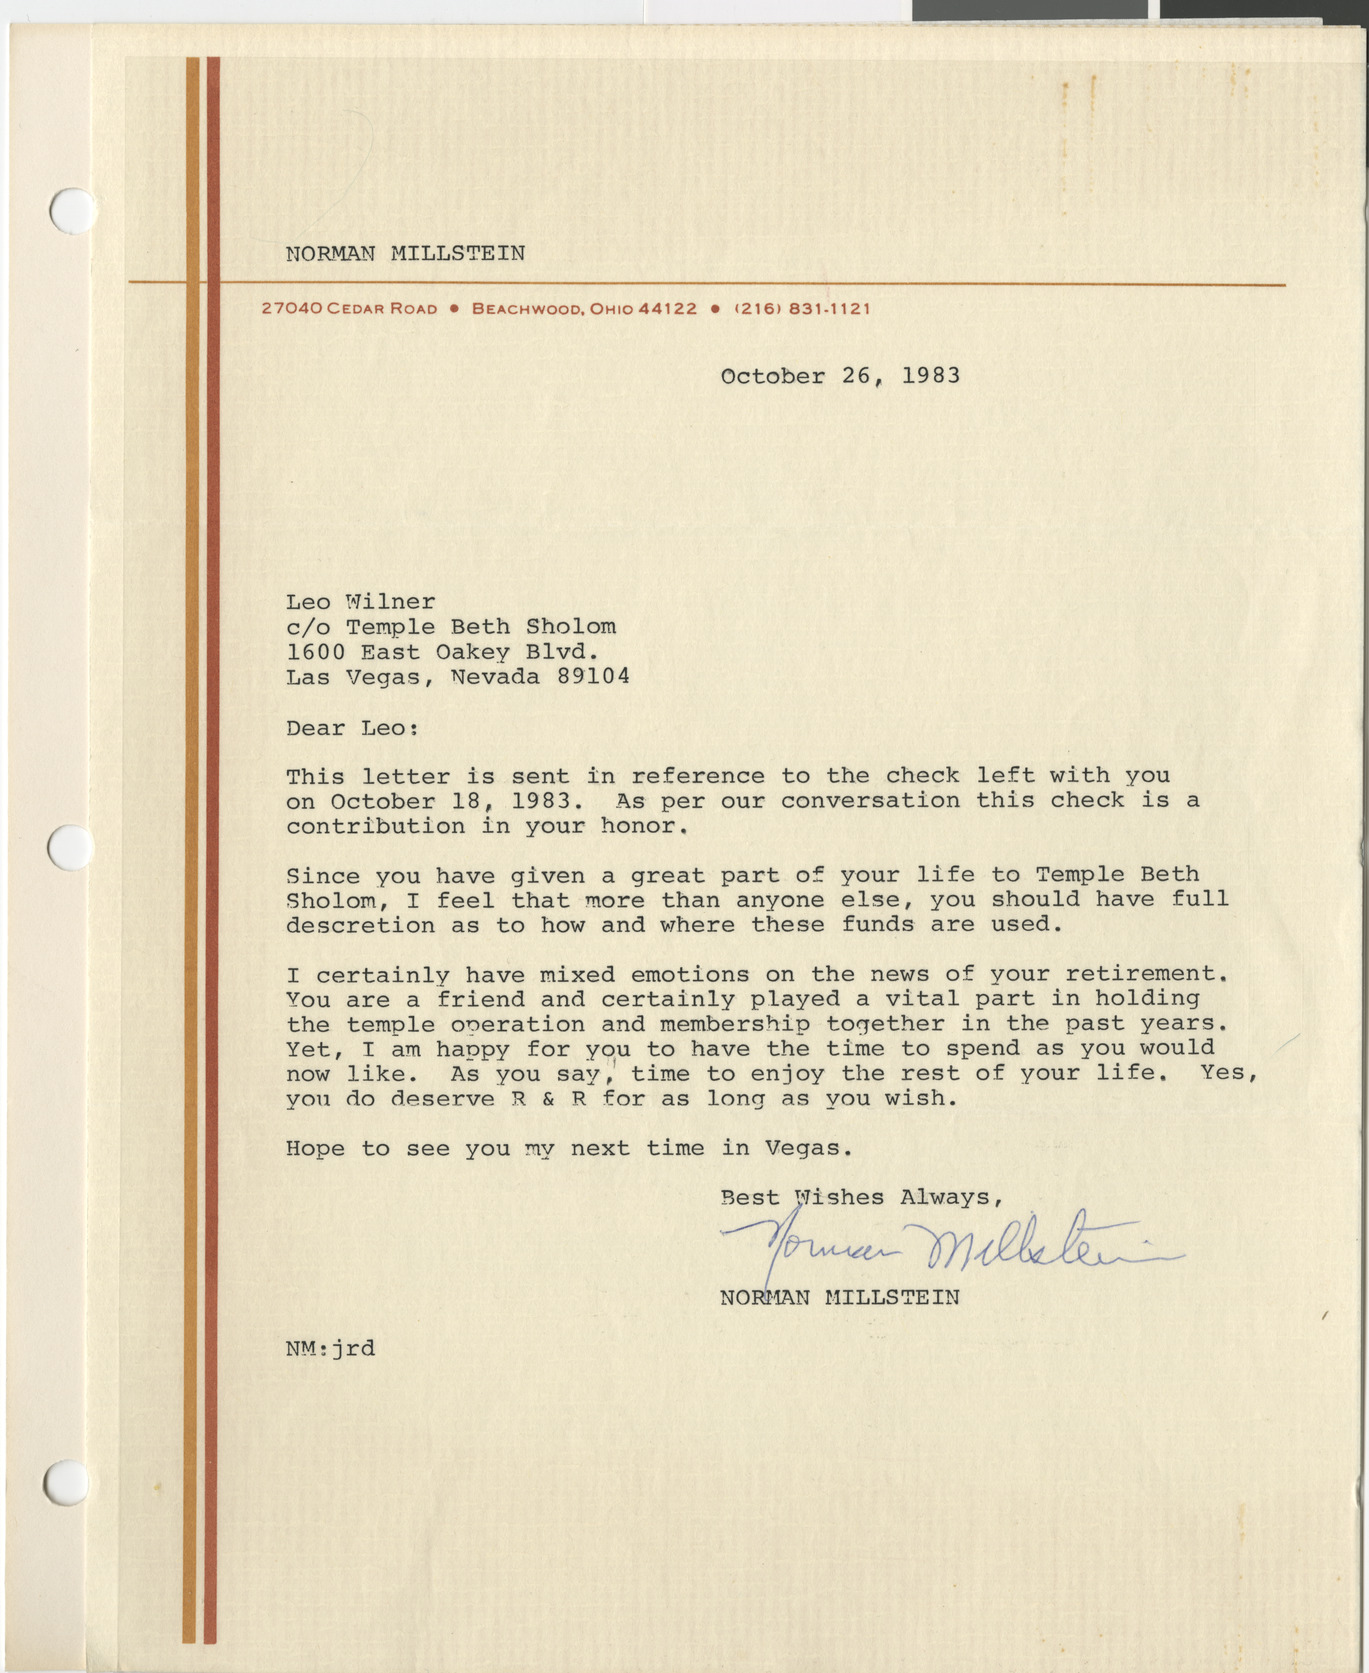 Letter from Norman Milstein (Beachwood, Ohio) to Leo Wilner, October 26, 1983